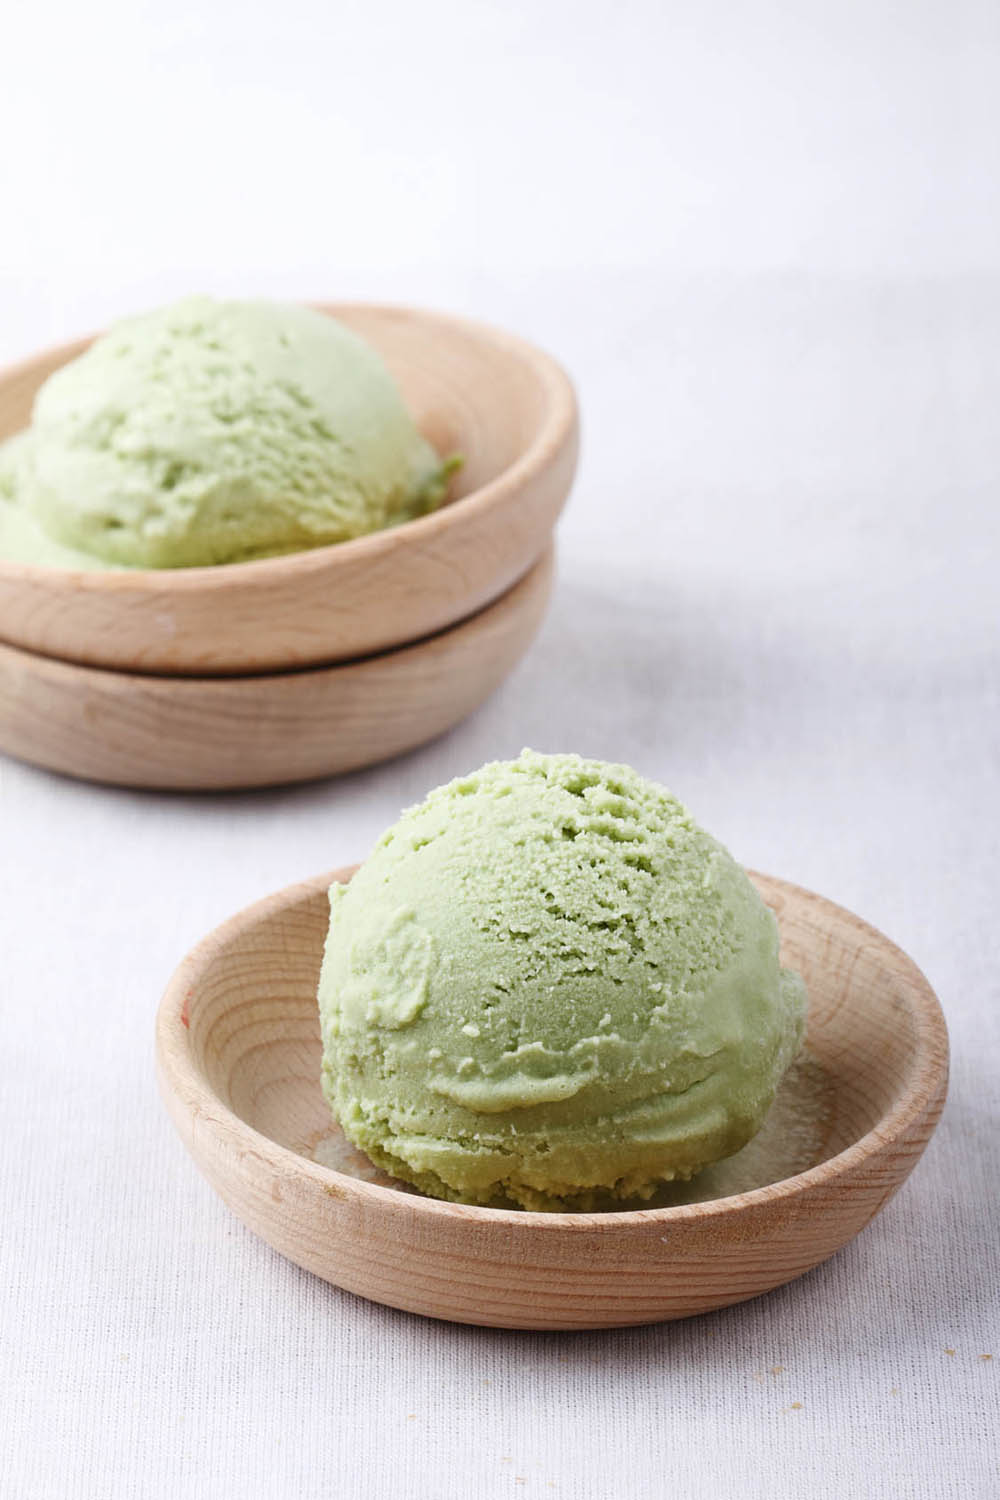 Green Tea (Matcha) Ice Cream Recipe – No Machine Needed!